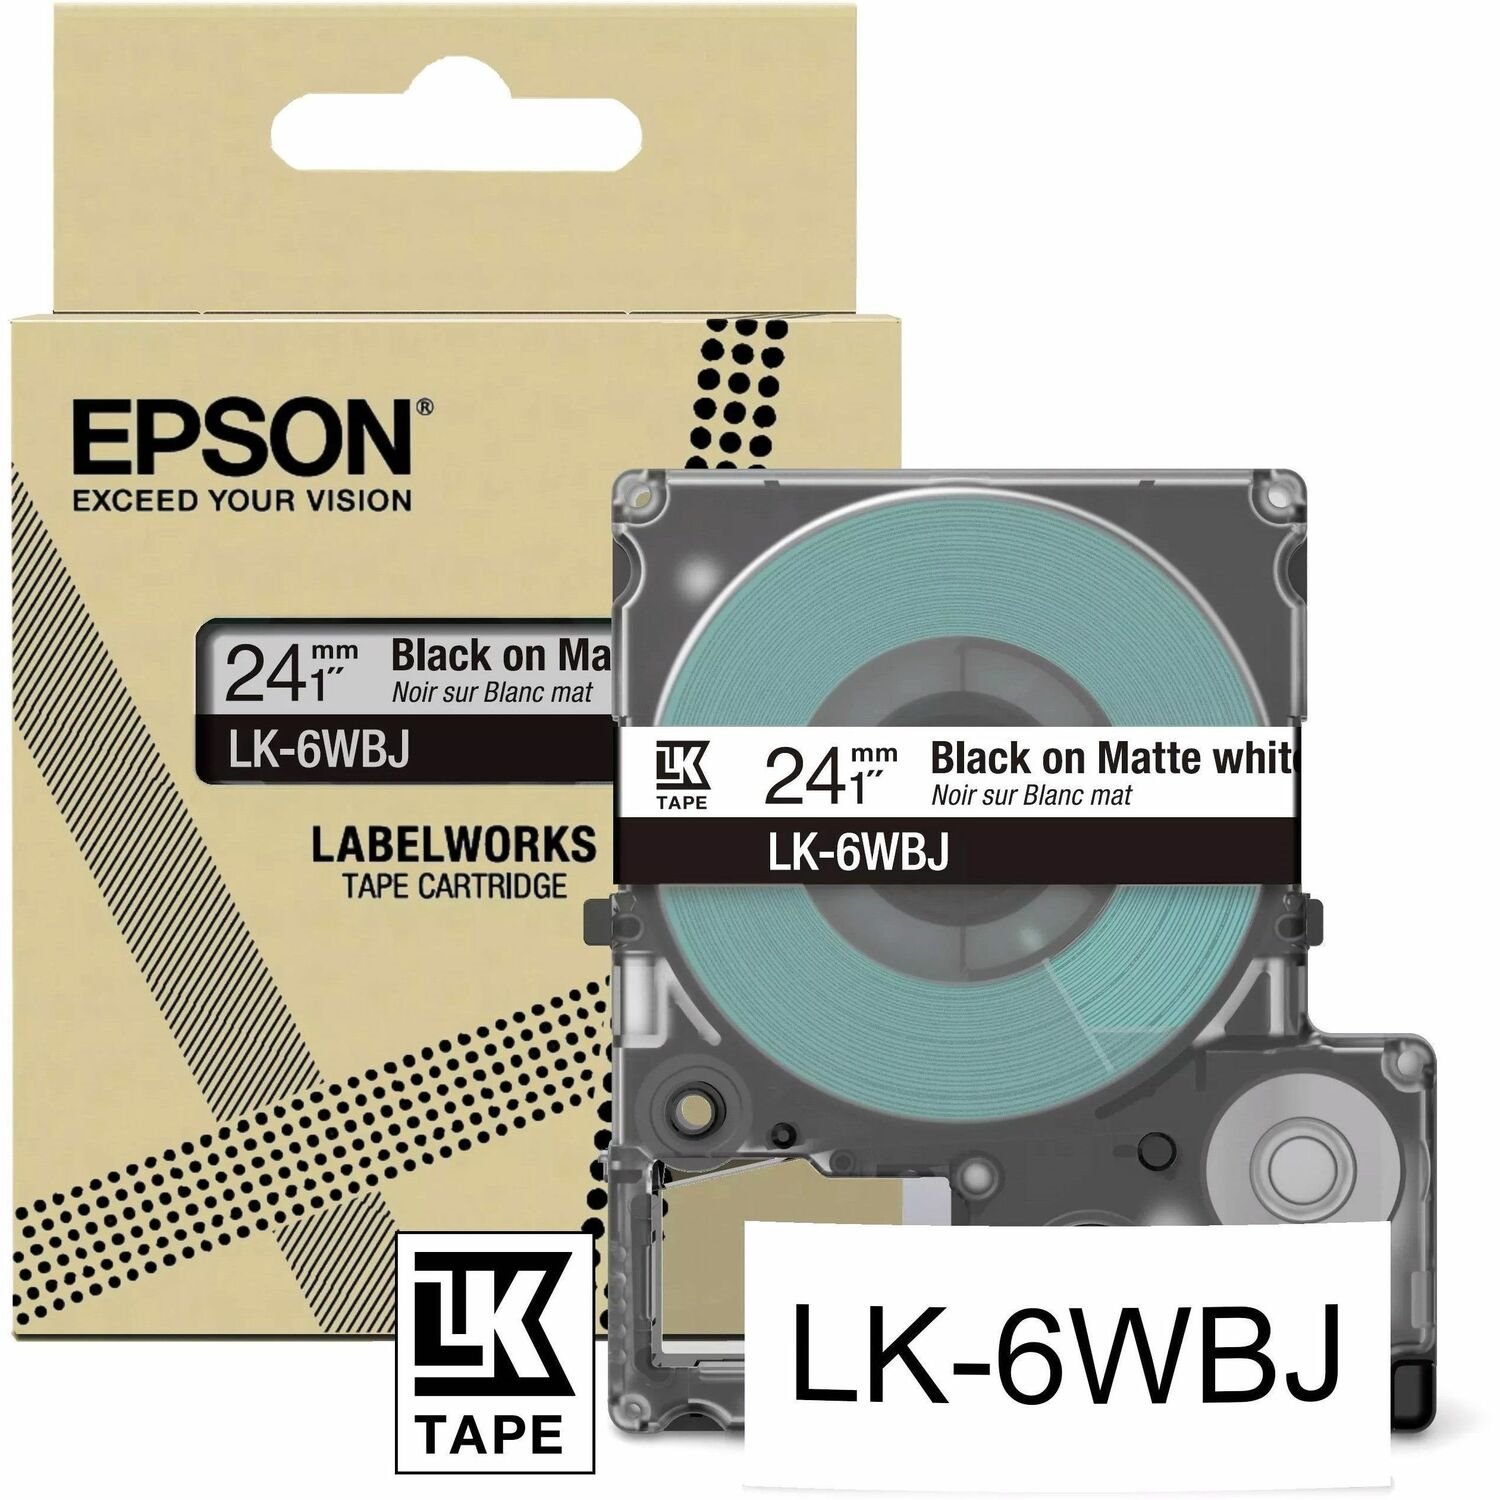 Epson LK-6WBJ Label Tape